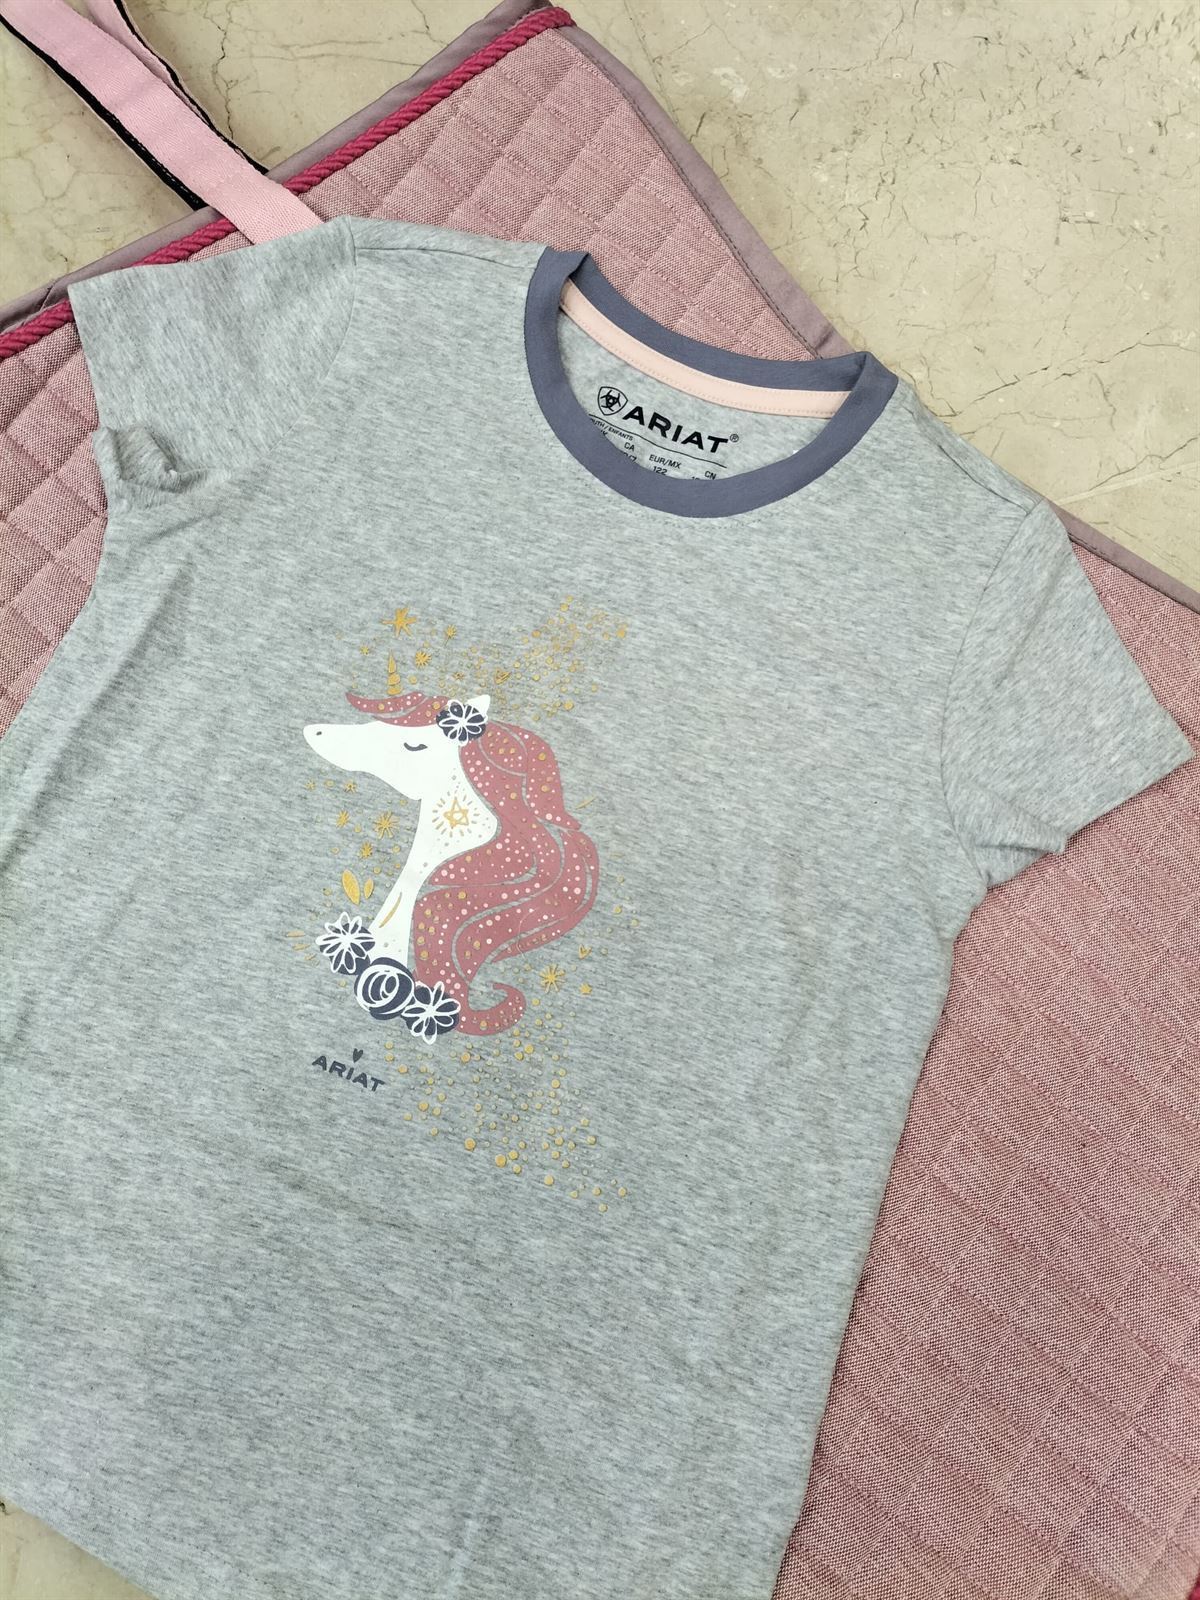 Camiseta Ariat Imagine tallaje infantil color gris caballo rosa TALLA 7 - Imagen 4